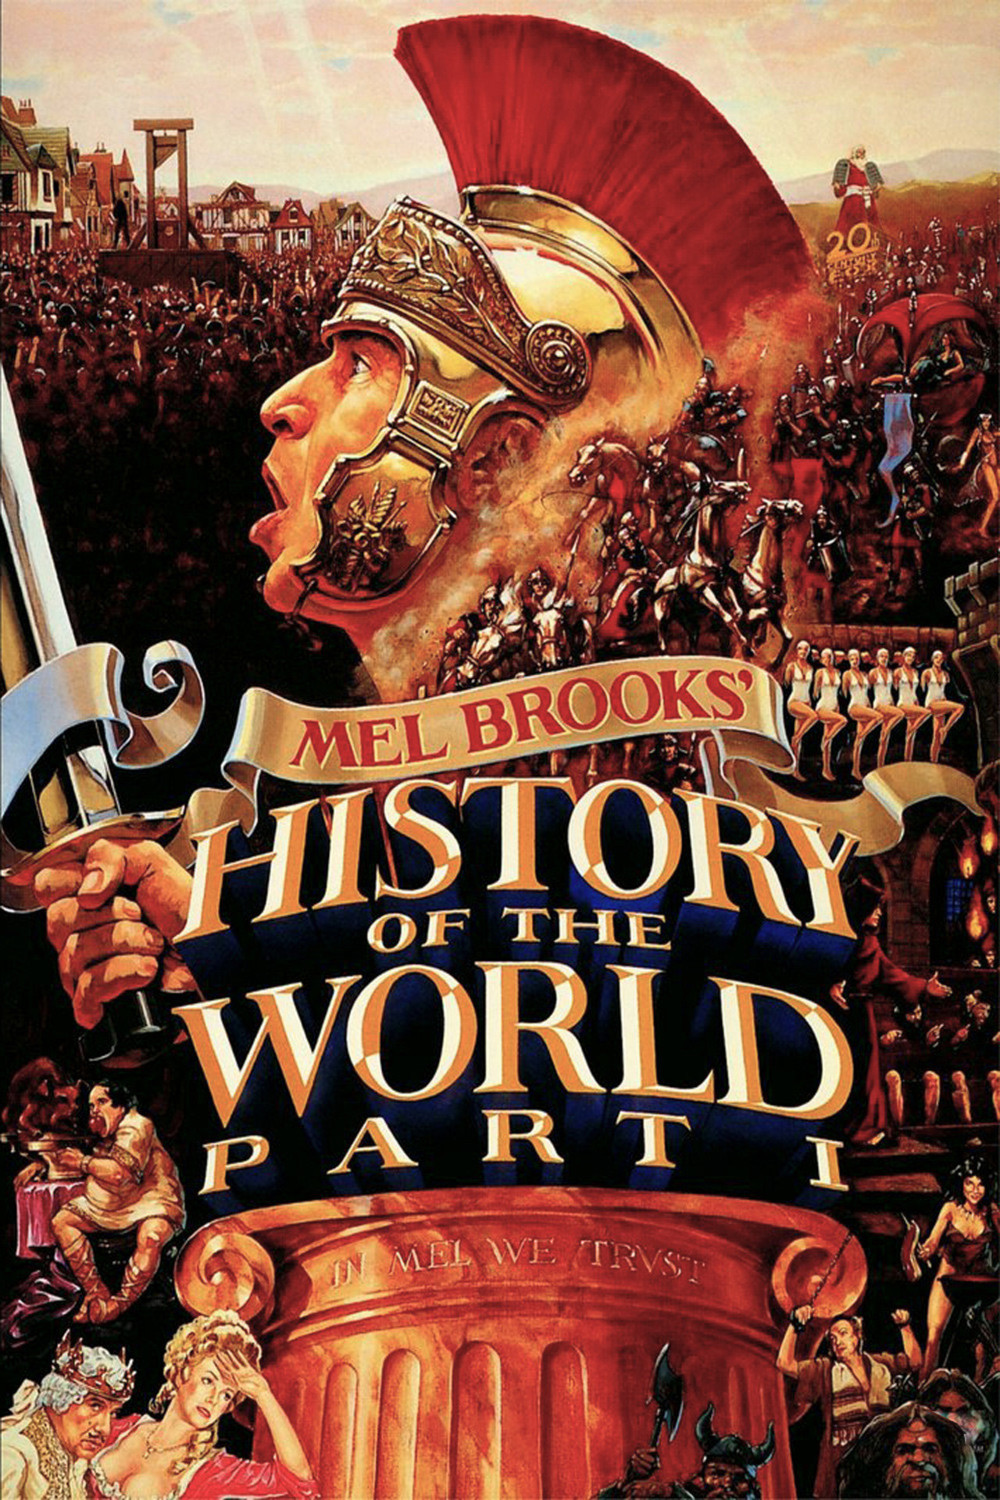 History of the World: Part I | Fandíme filmu